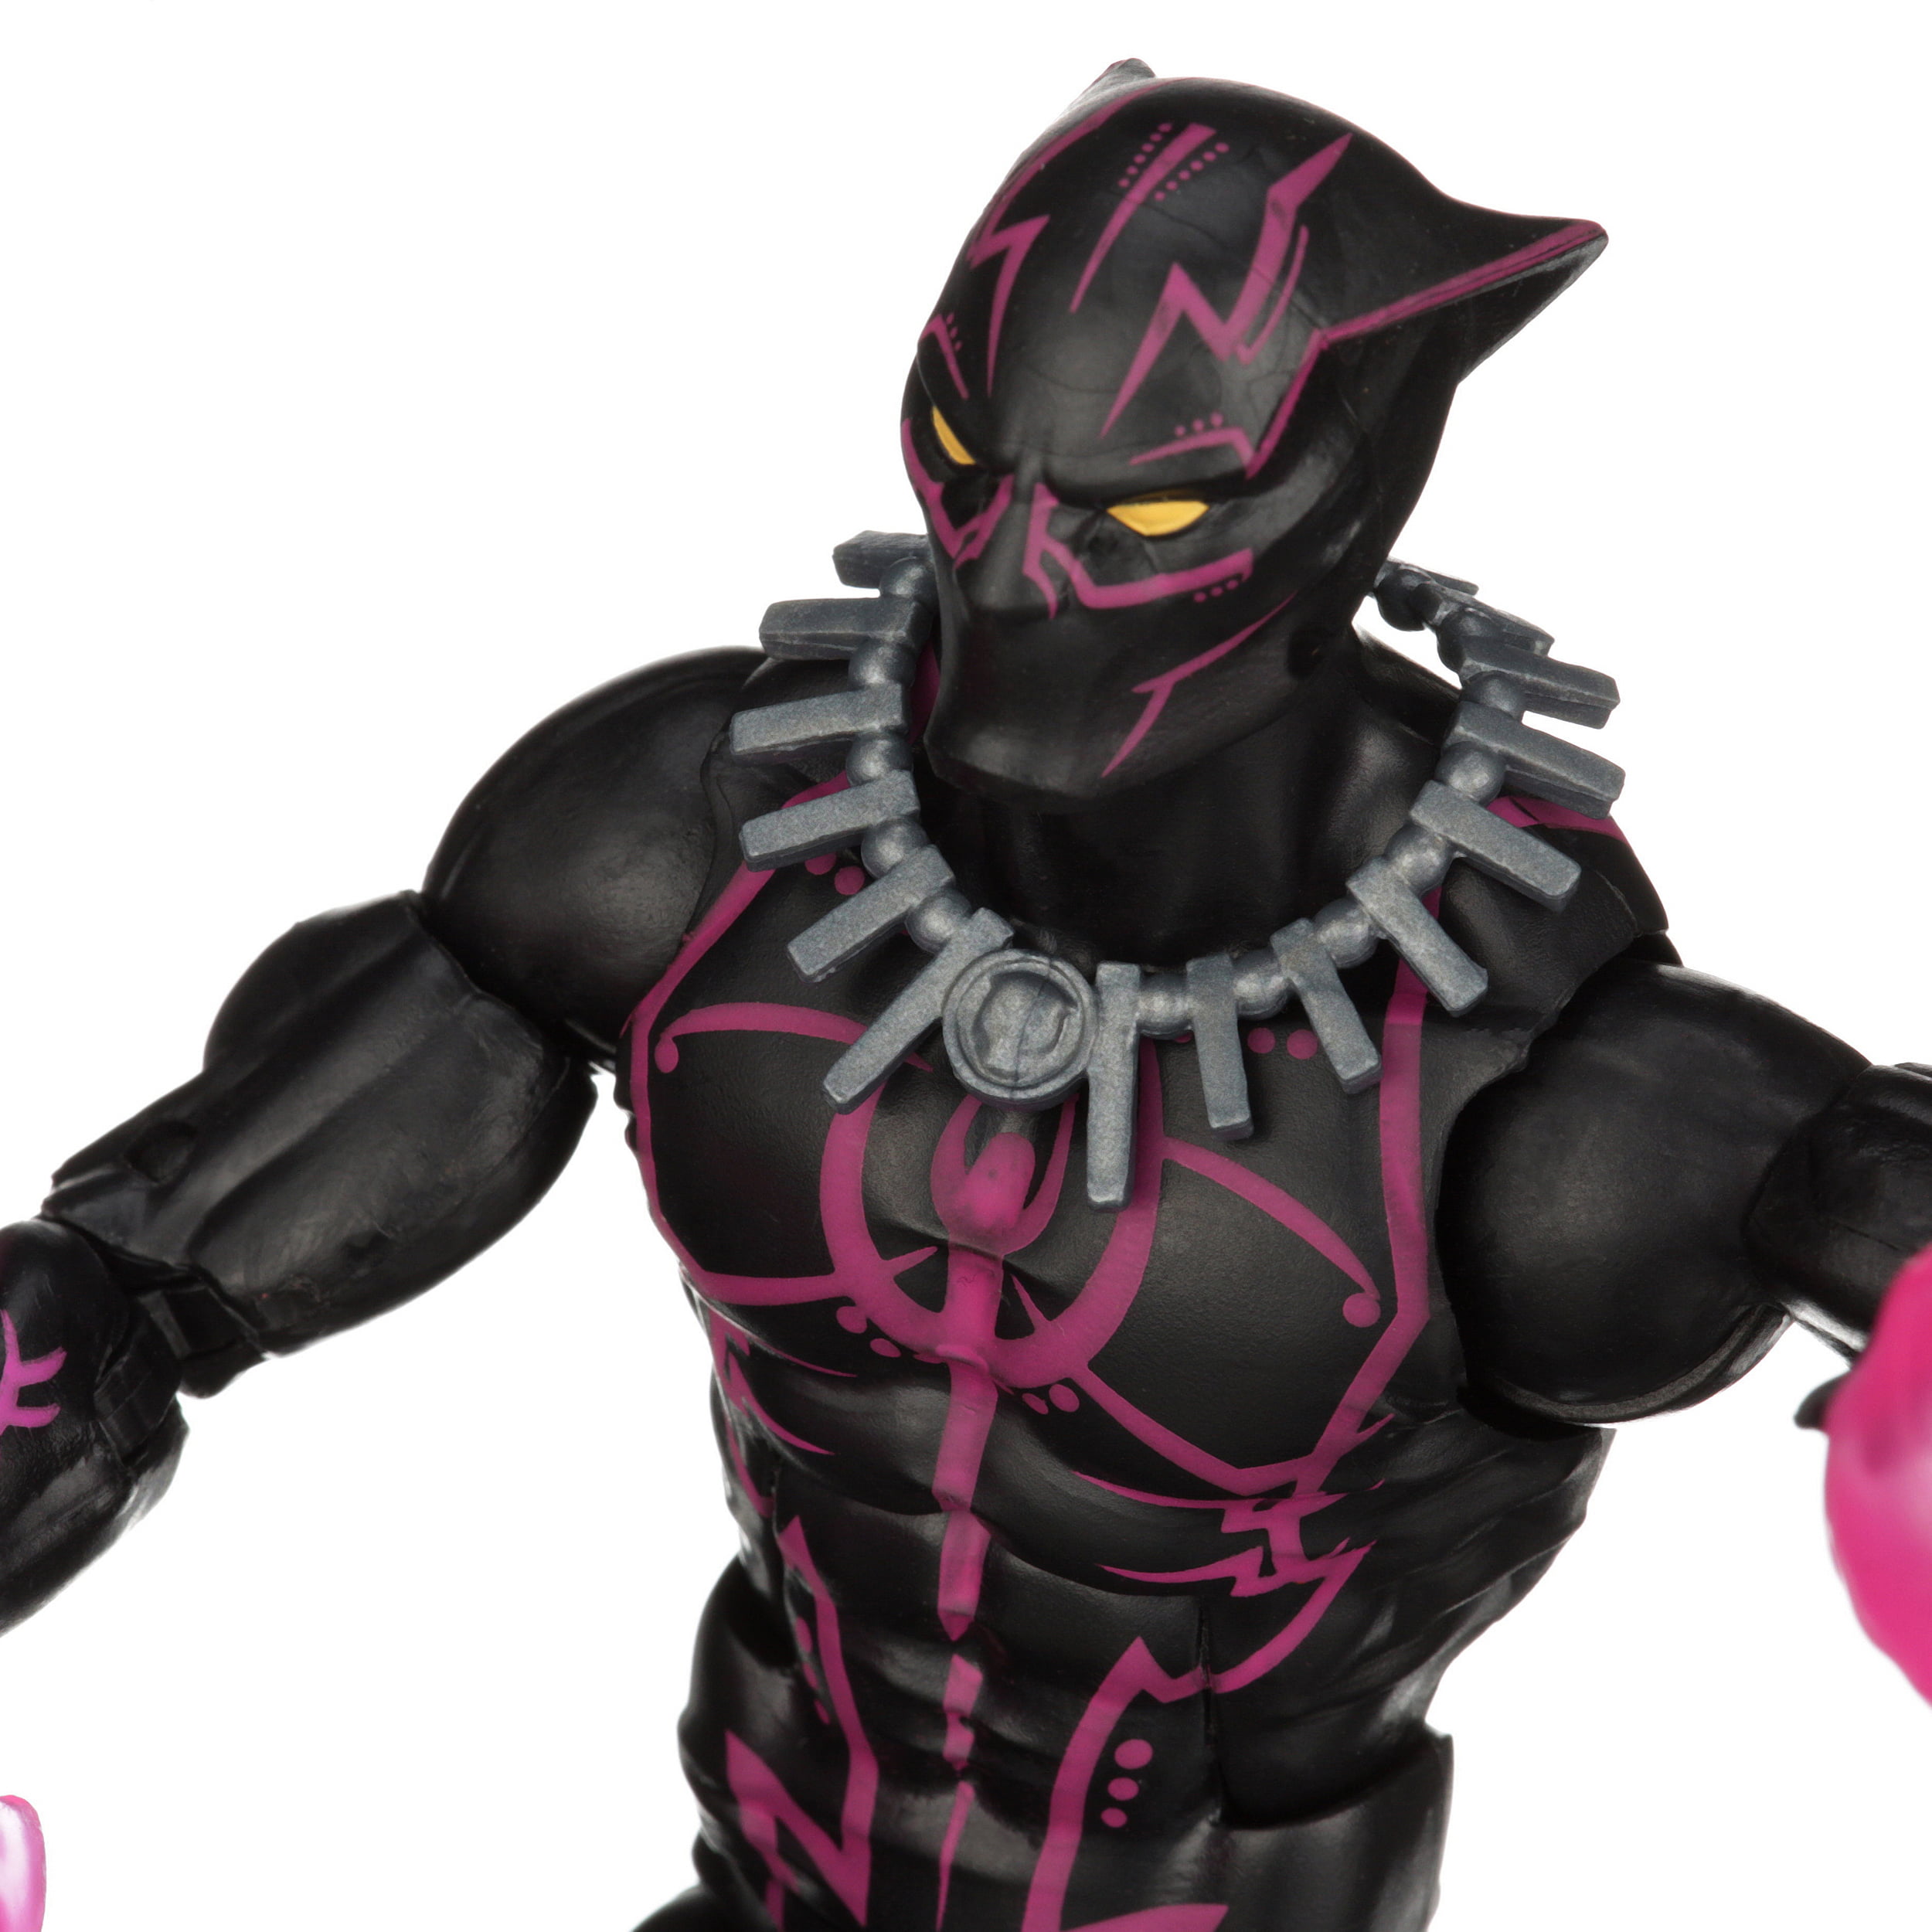 2017 Marvel Vibranium Black Panther 6 Inch Action Figure for sale online 